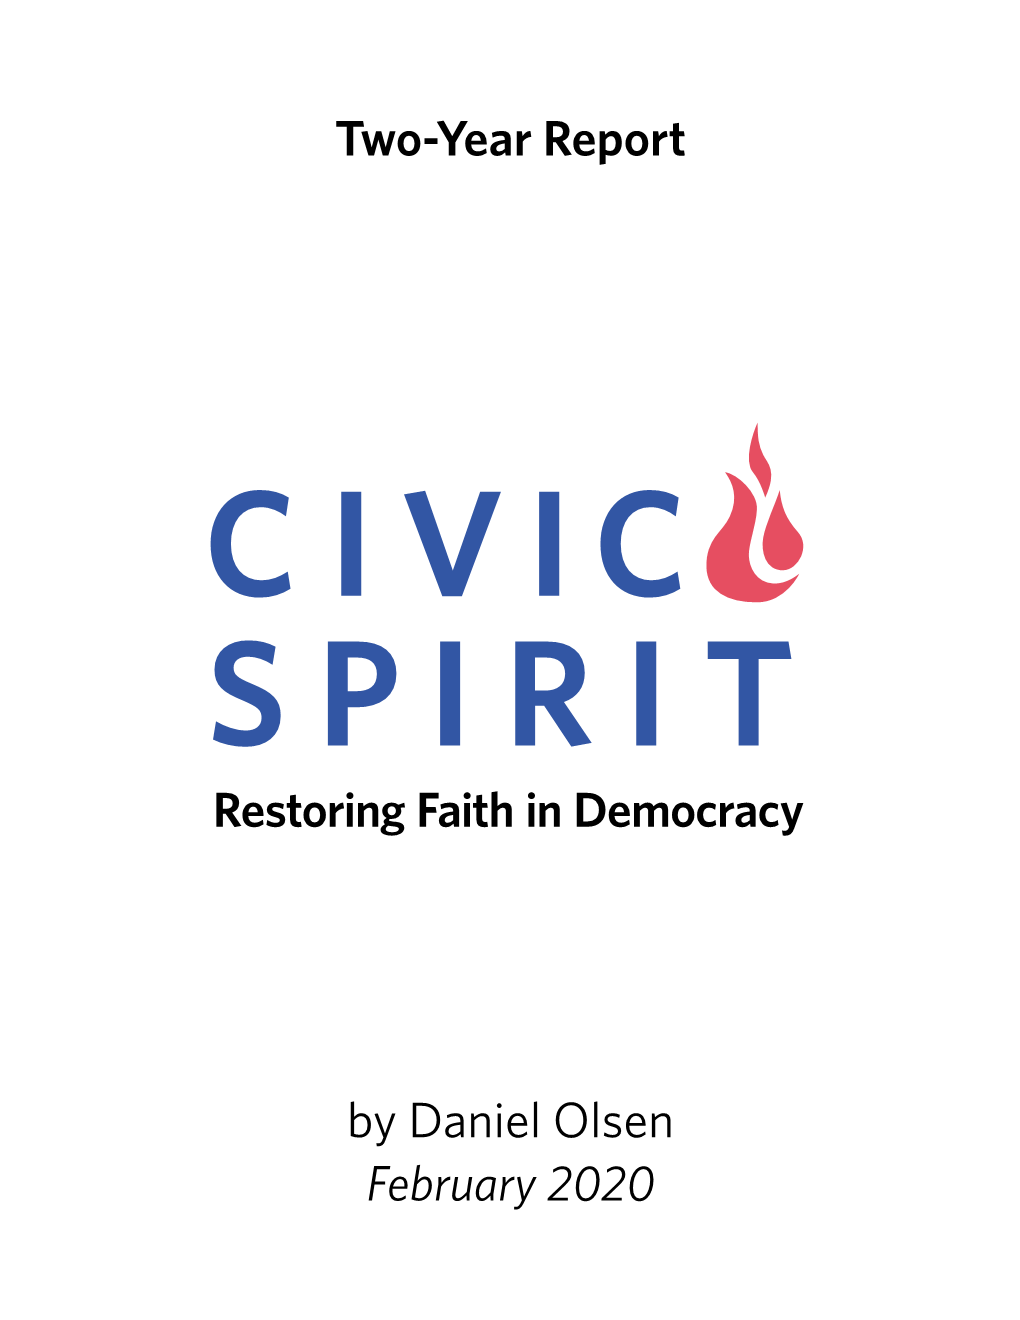 Two-Year Report by Daniel Olsen February 2020